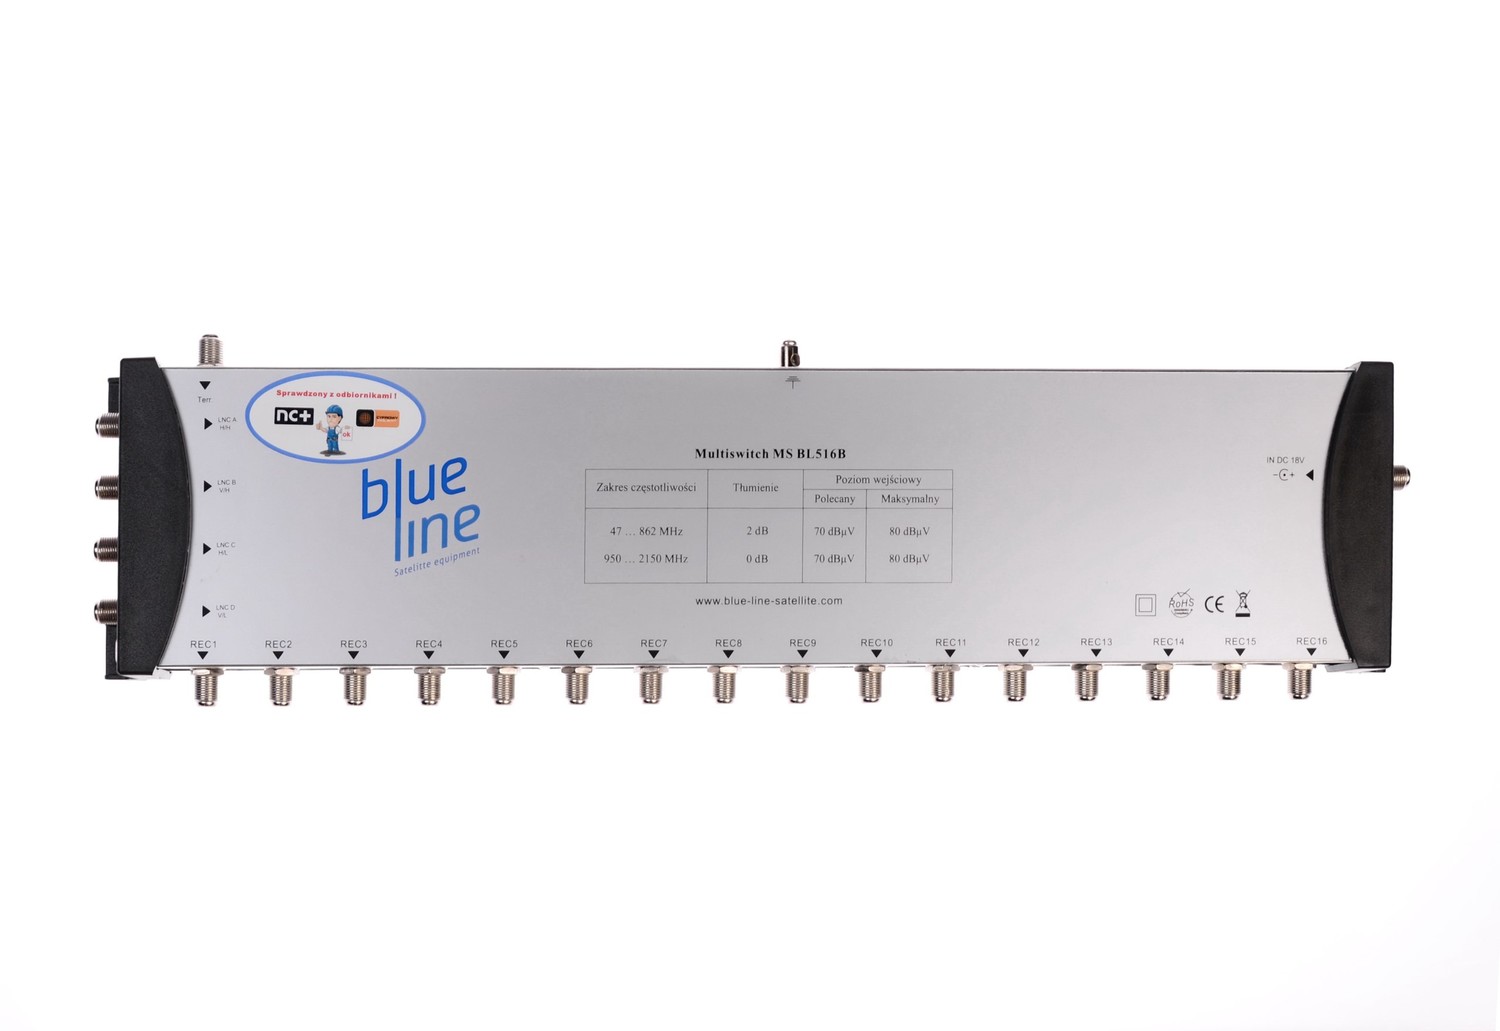 Multipřepínač 5/16 Ms BL516B Blue Line